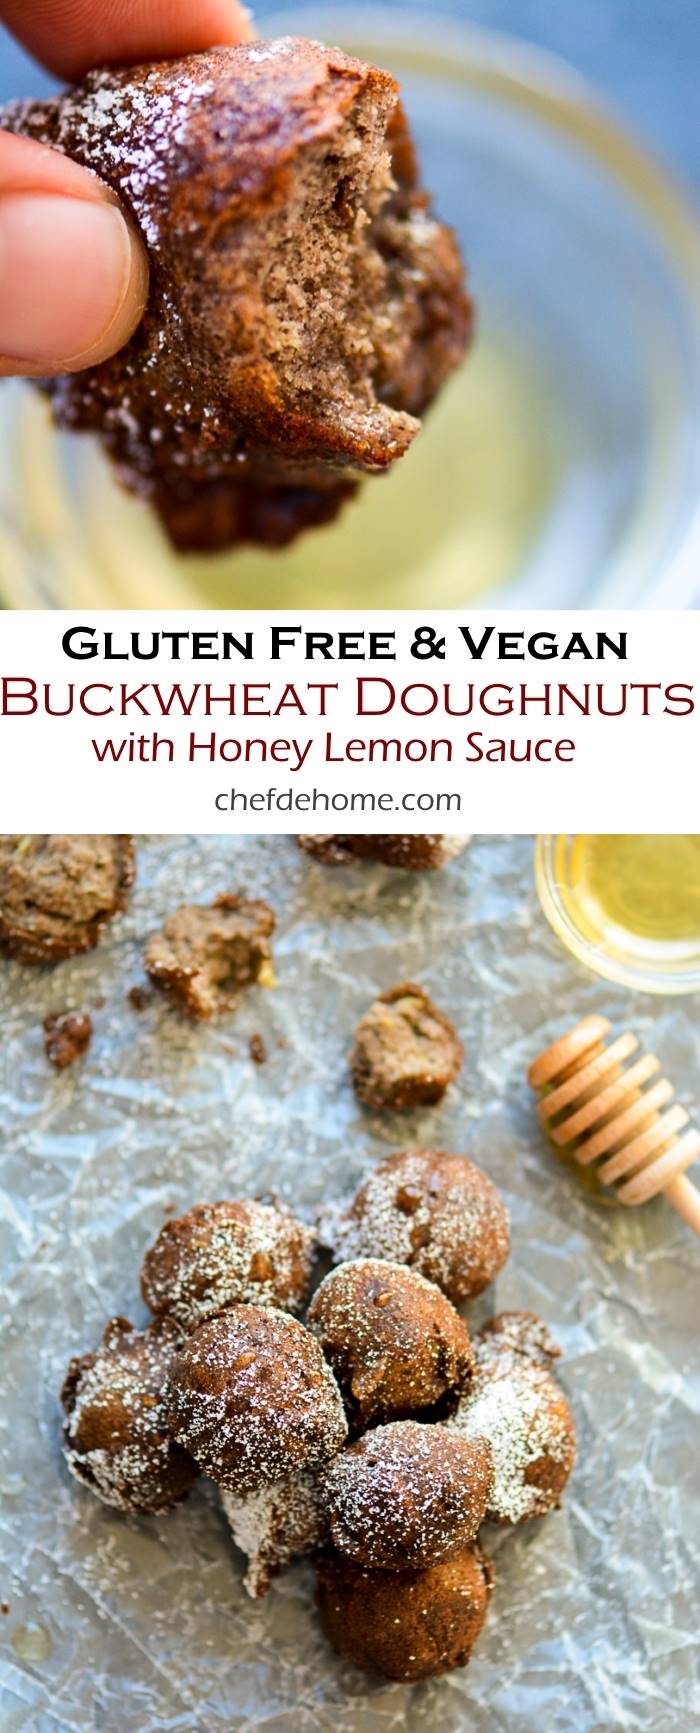 Gluten Free Doughnuts with Honey-Lemon Sauce - Celiac Awareness Month